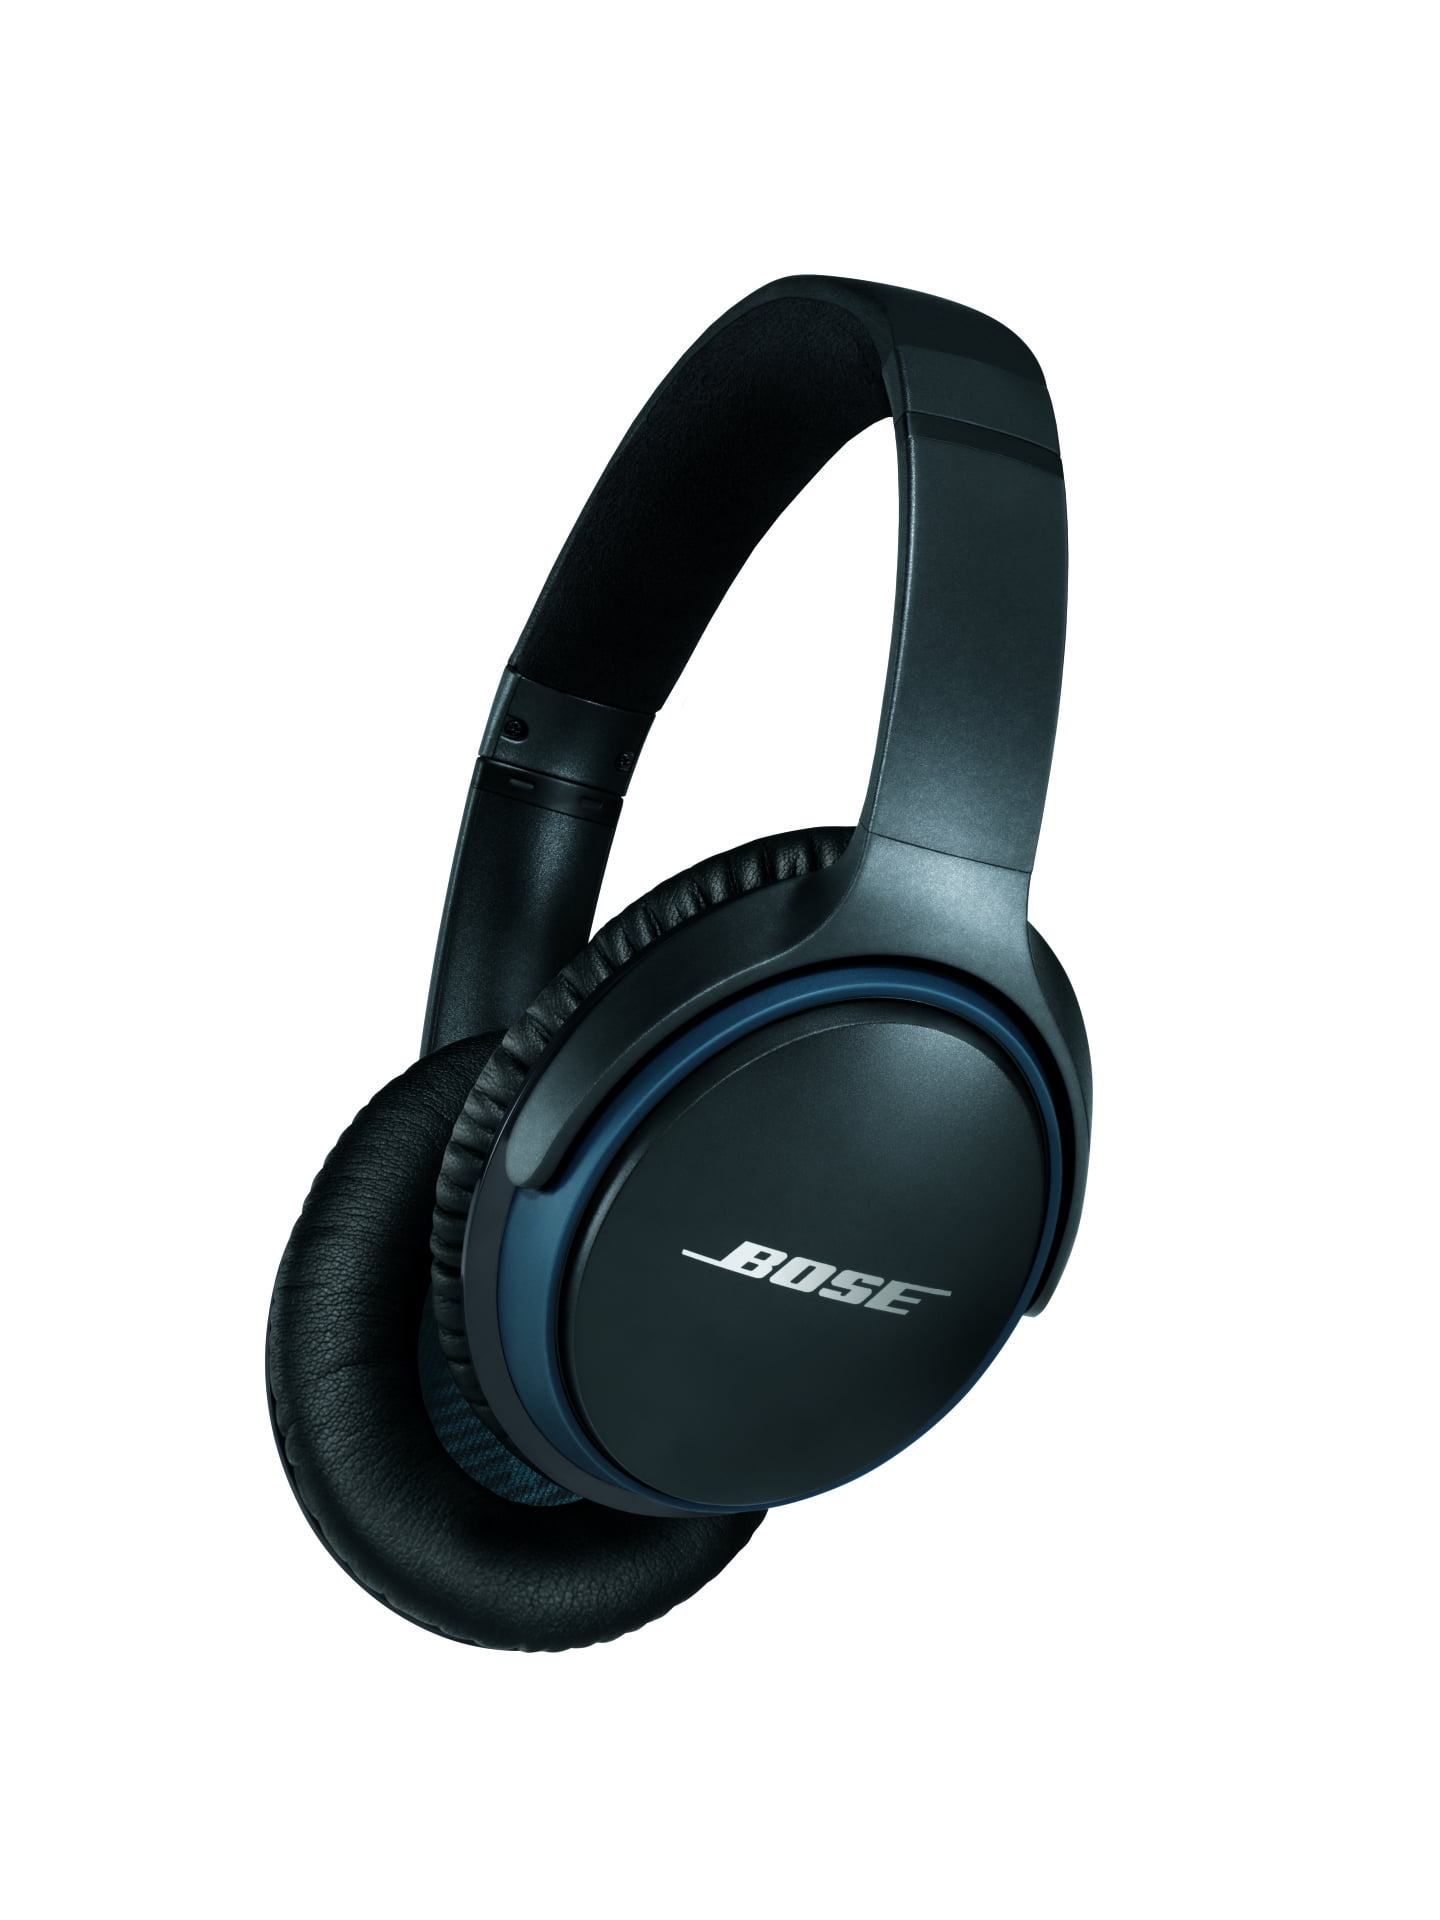 Bose SoundLink Around Ear Wireless Bluetooth Headphones II - Black